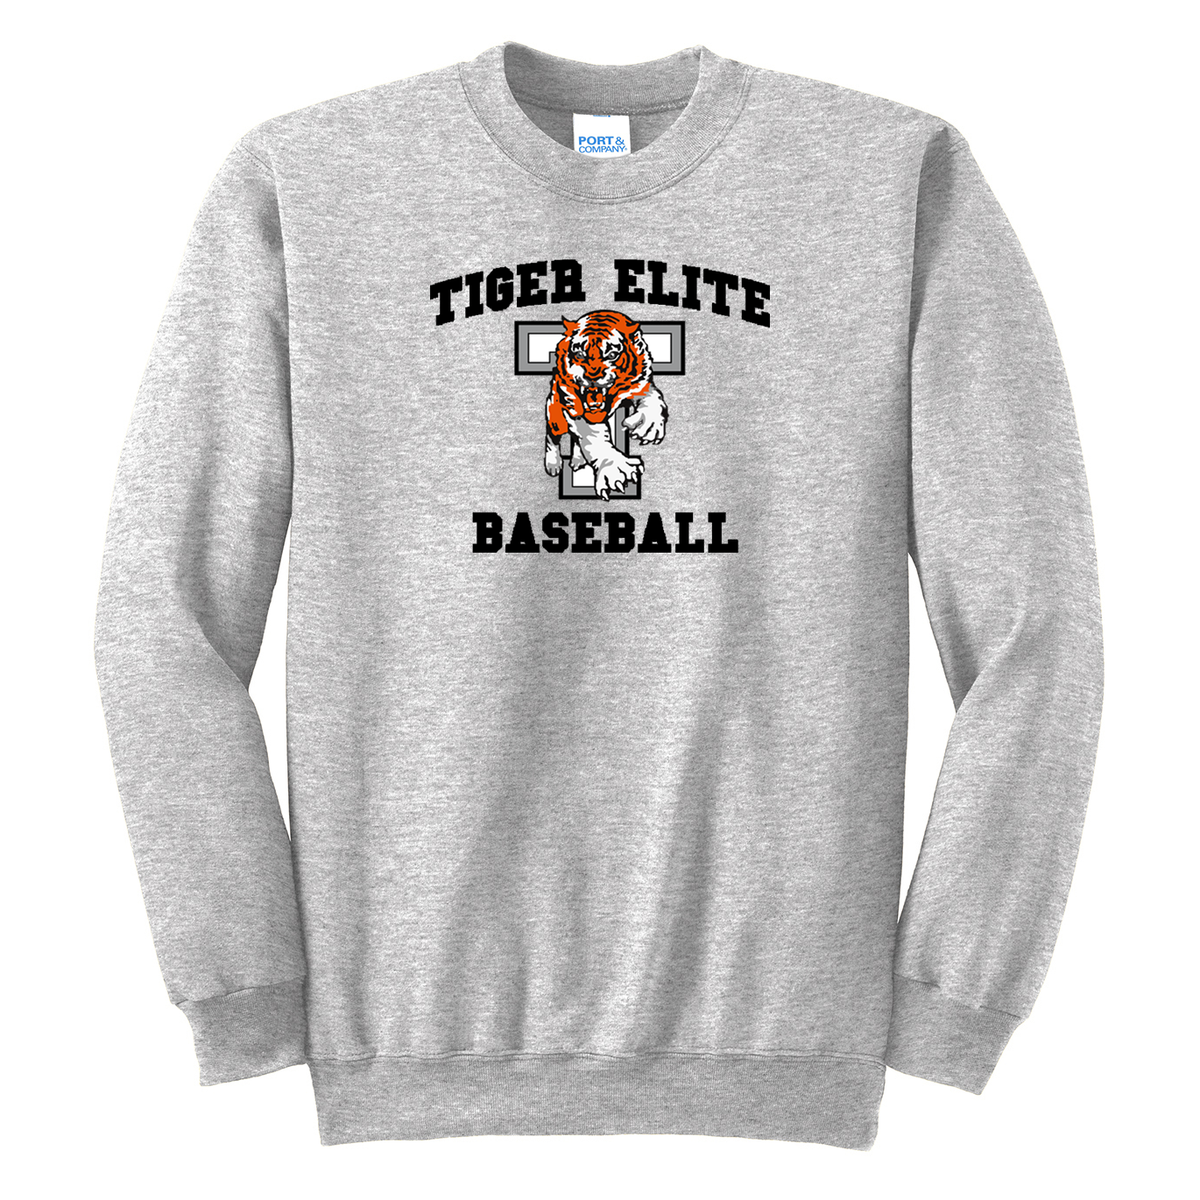 Tiger Elite Baseball Crew Neck Sweater